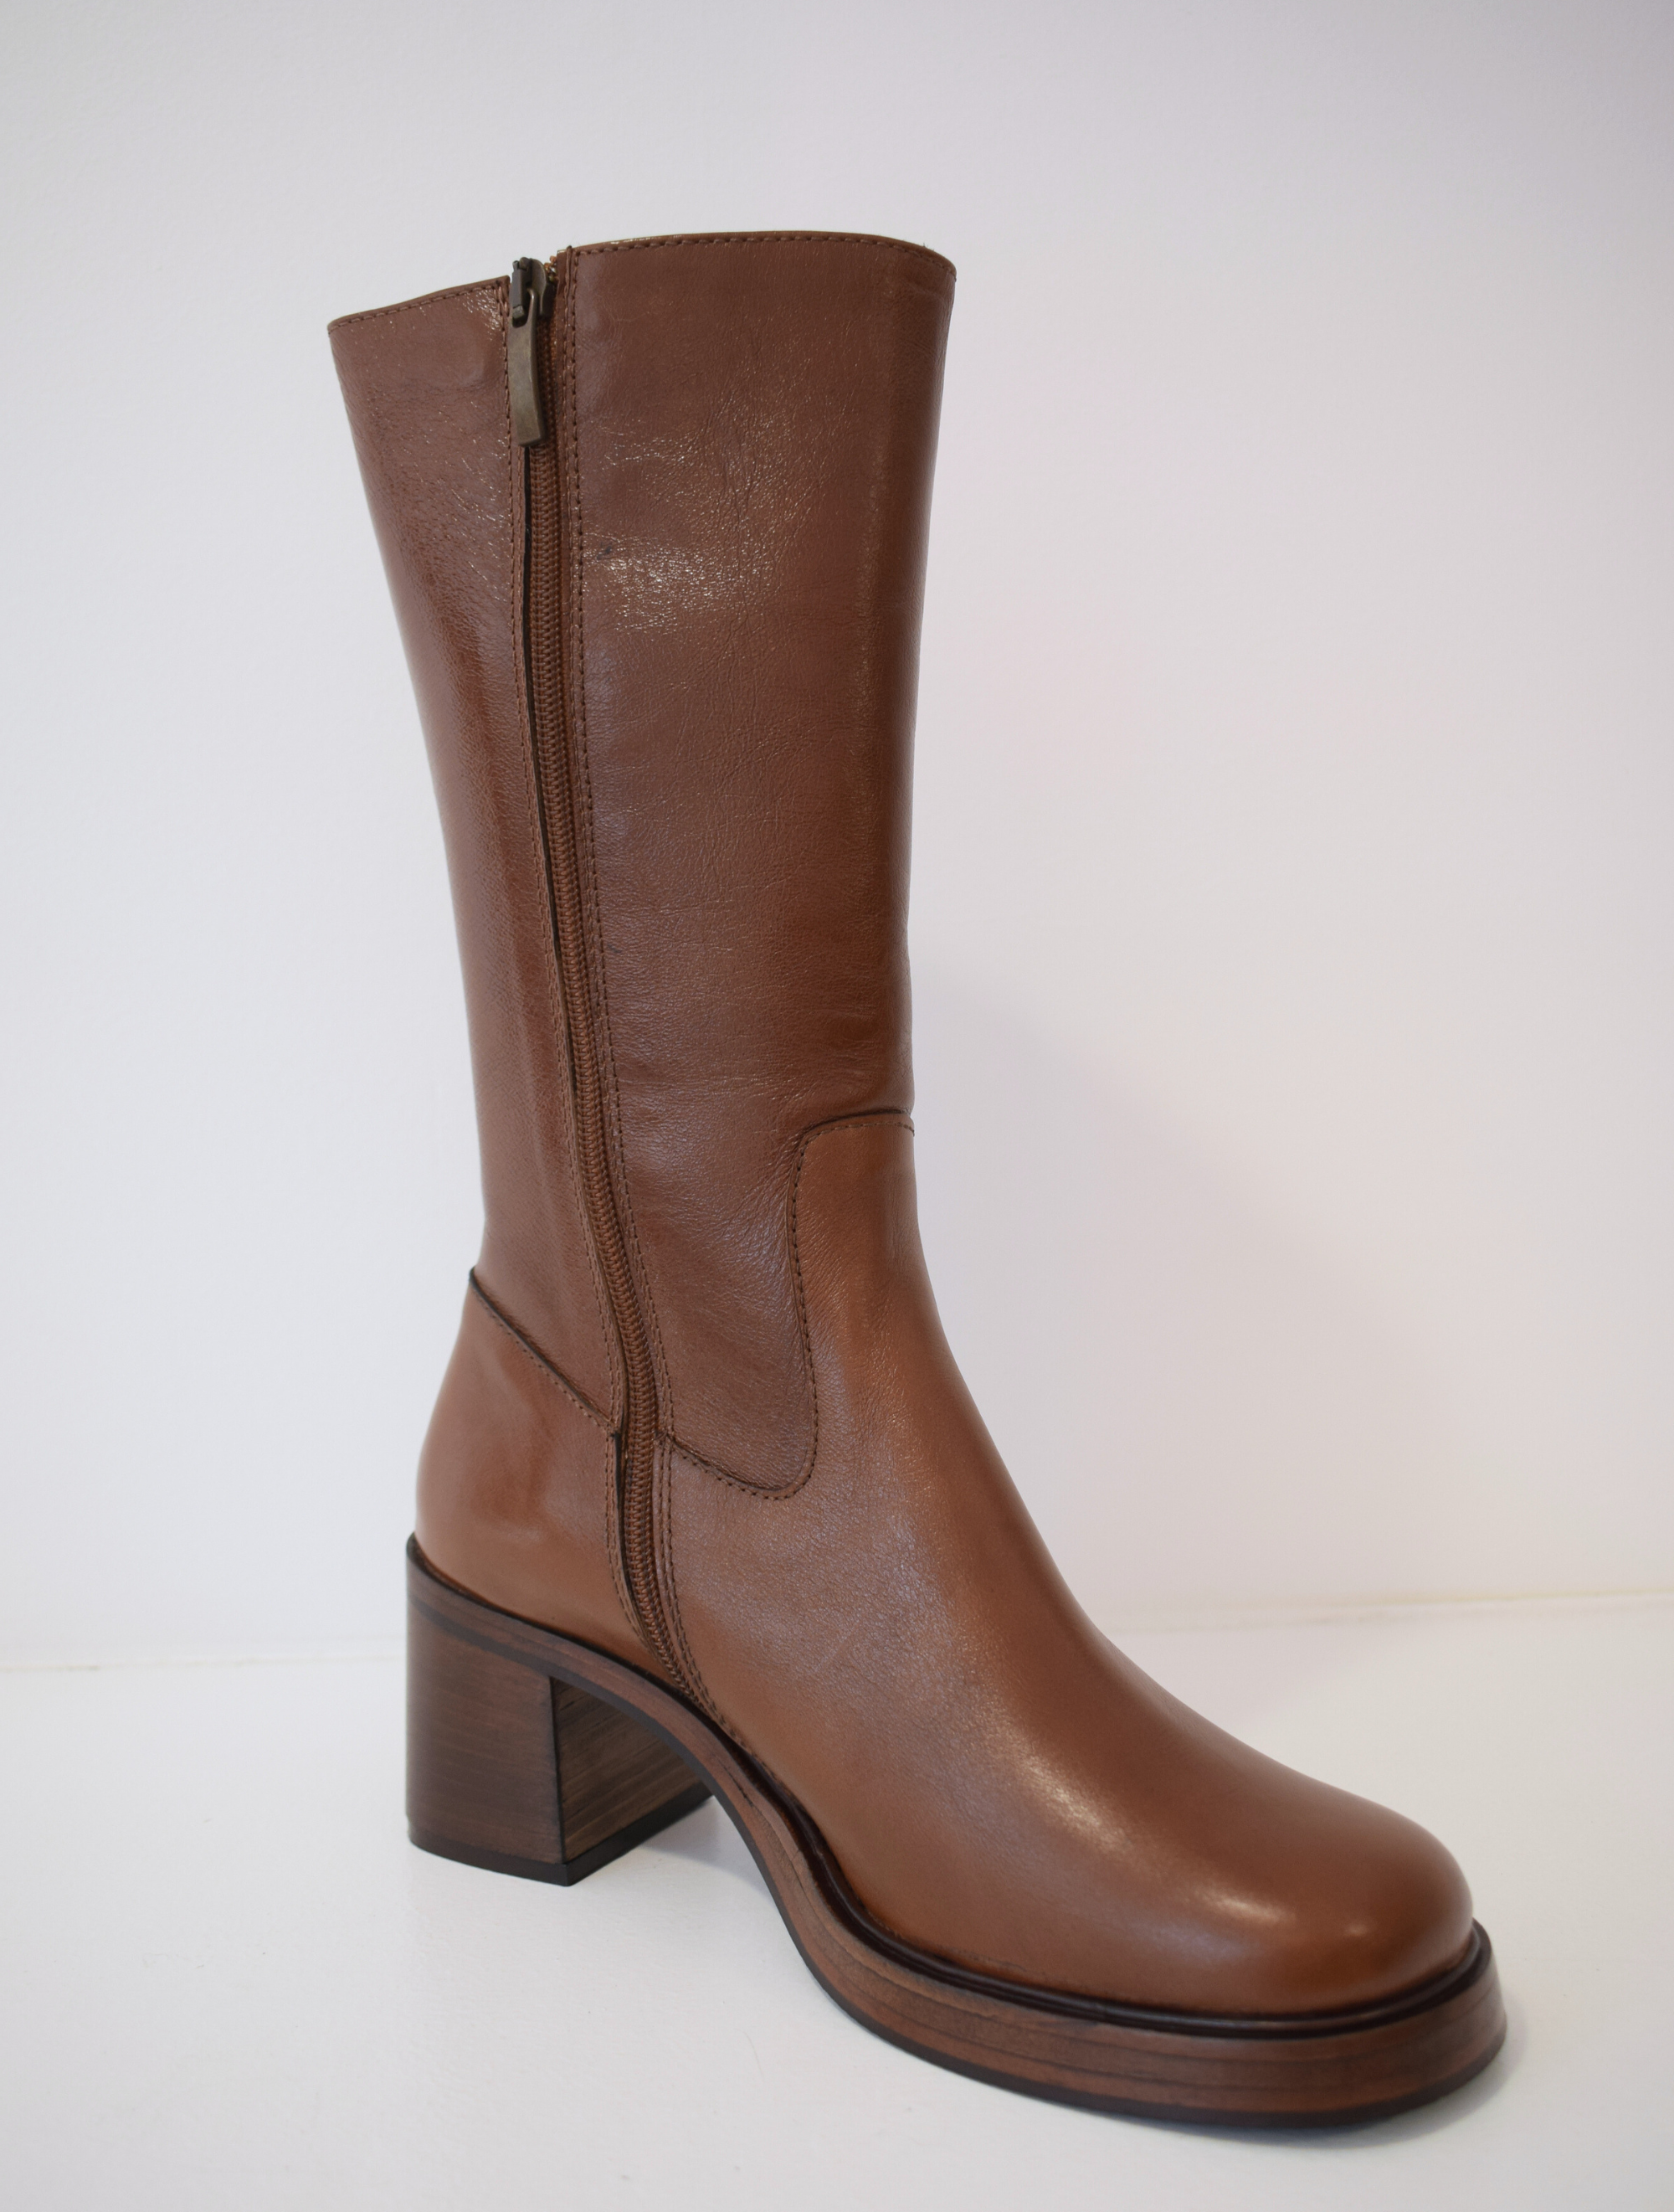 Chestnut brown medium length boot with round toe woodne block heel and wooden platform sole with inner zip fastening